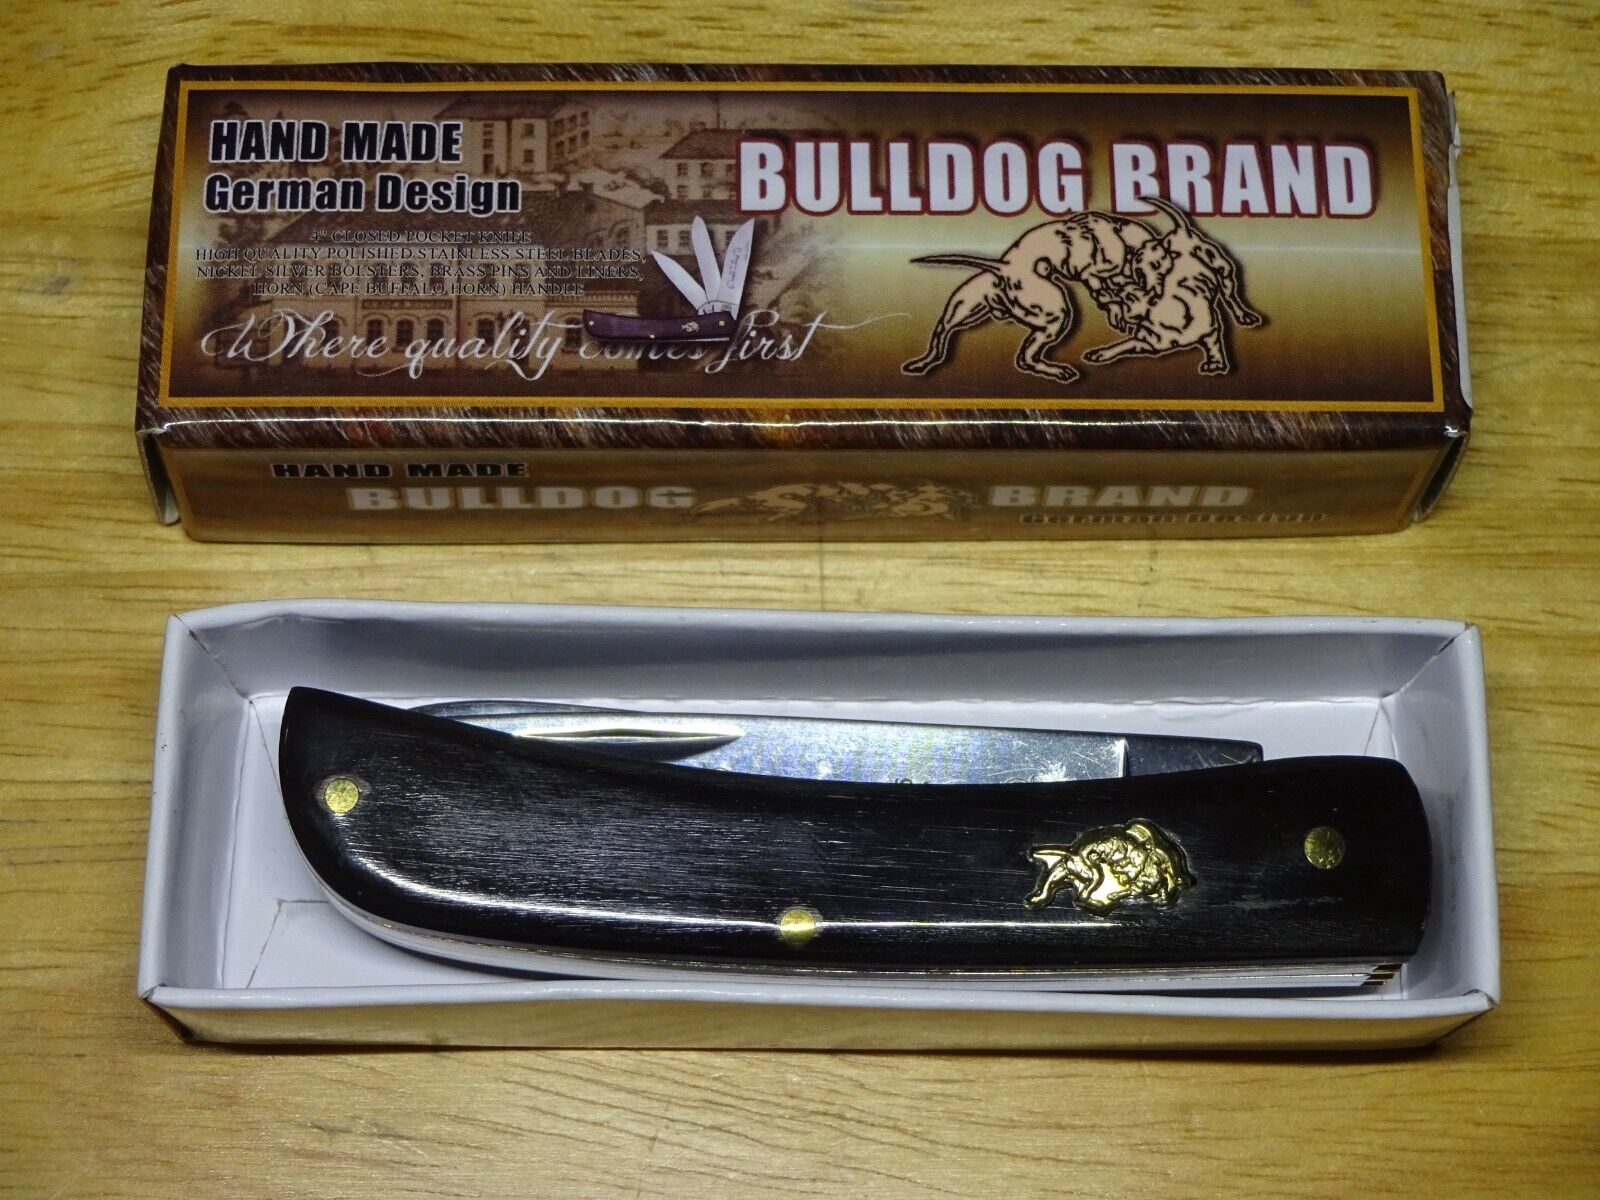 handmade bulldog brand german design pocket knife premier edition one of 300